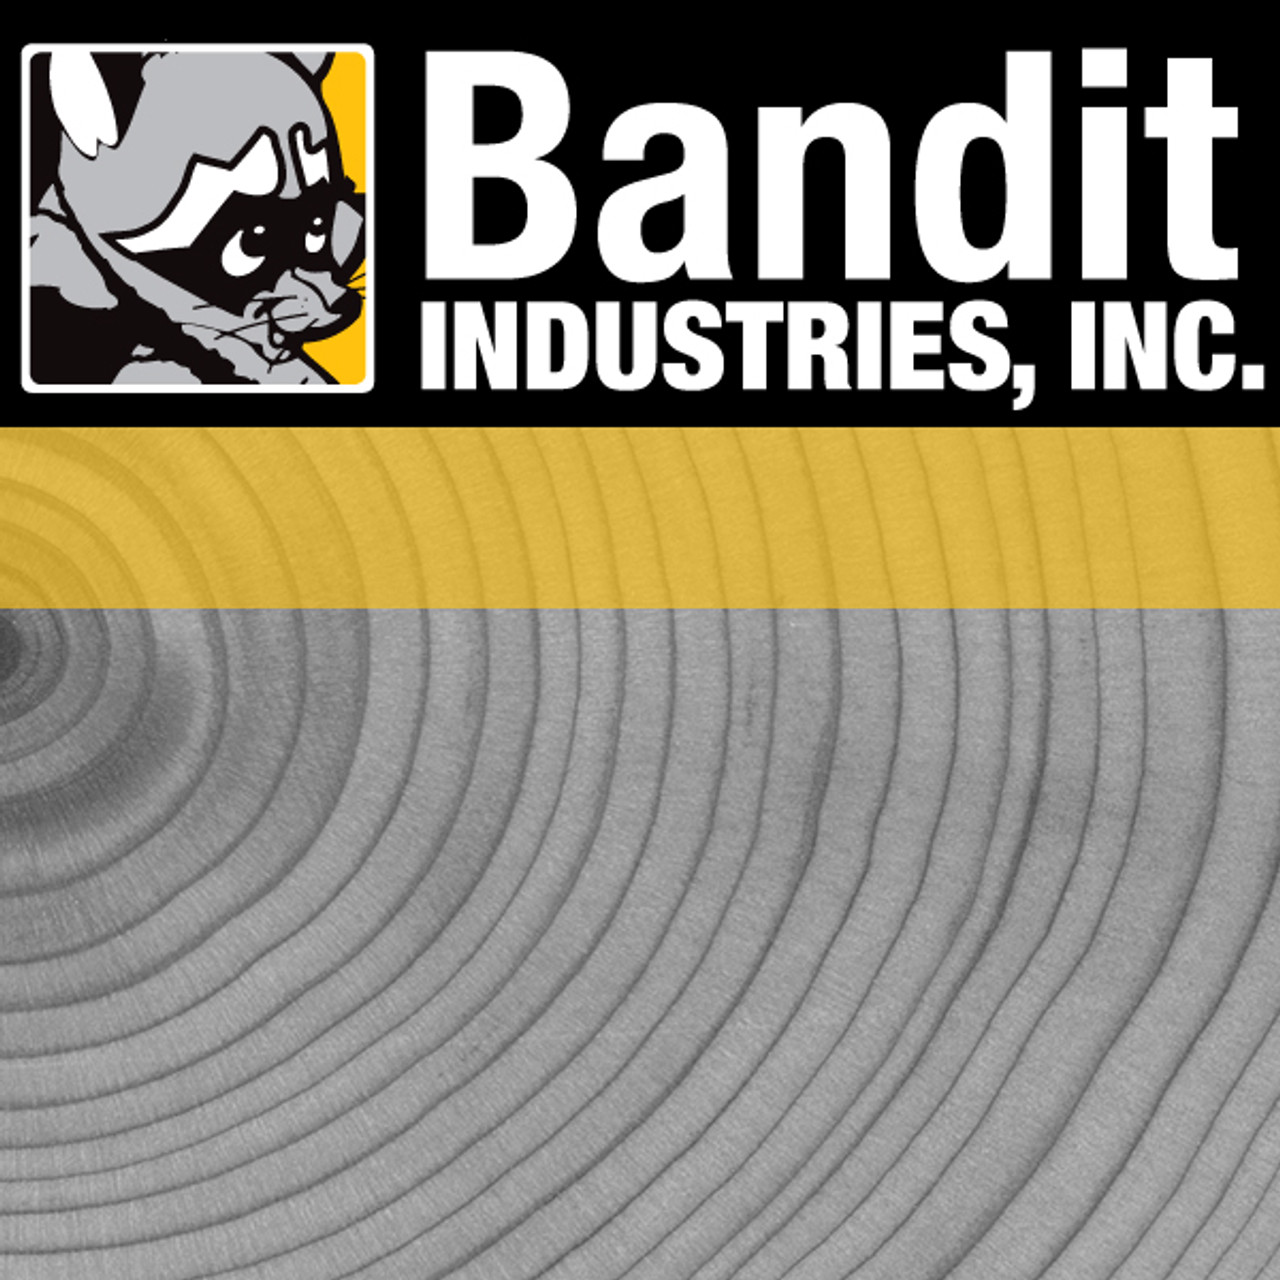 900-2927-91: BANDIT BANDIT PANEL IGN. SWITCH, ANIT-RESTART ALL KEYED ALIKE